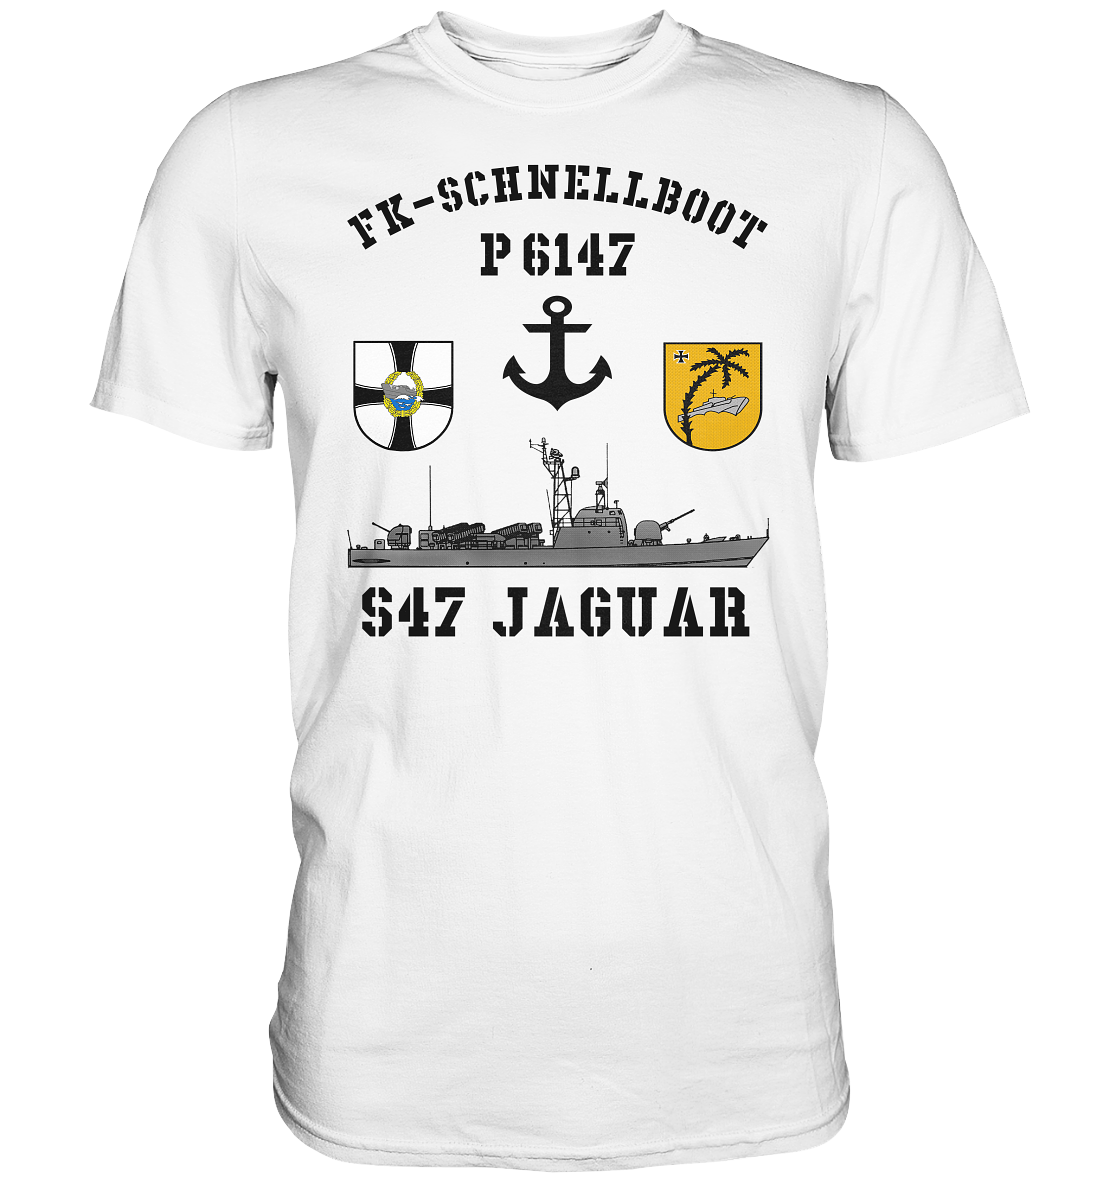 P6147 S47 JAGUAR - Premium Shirt